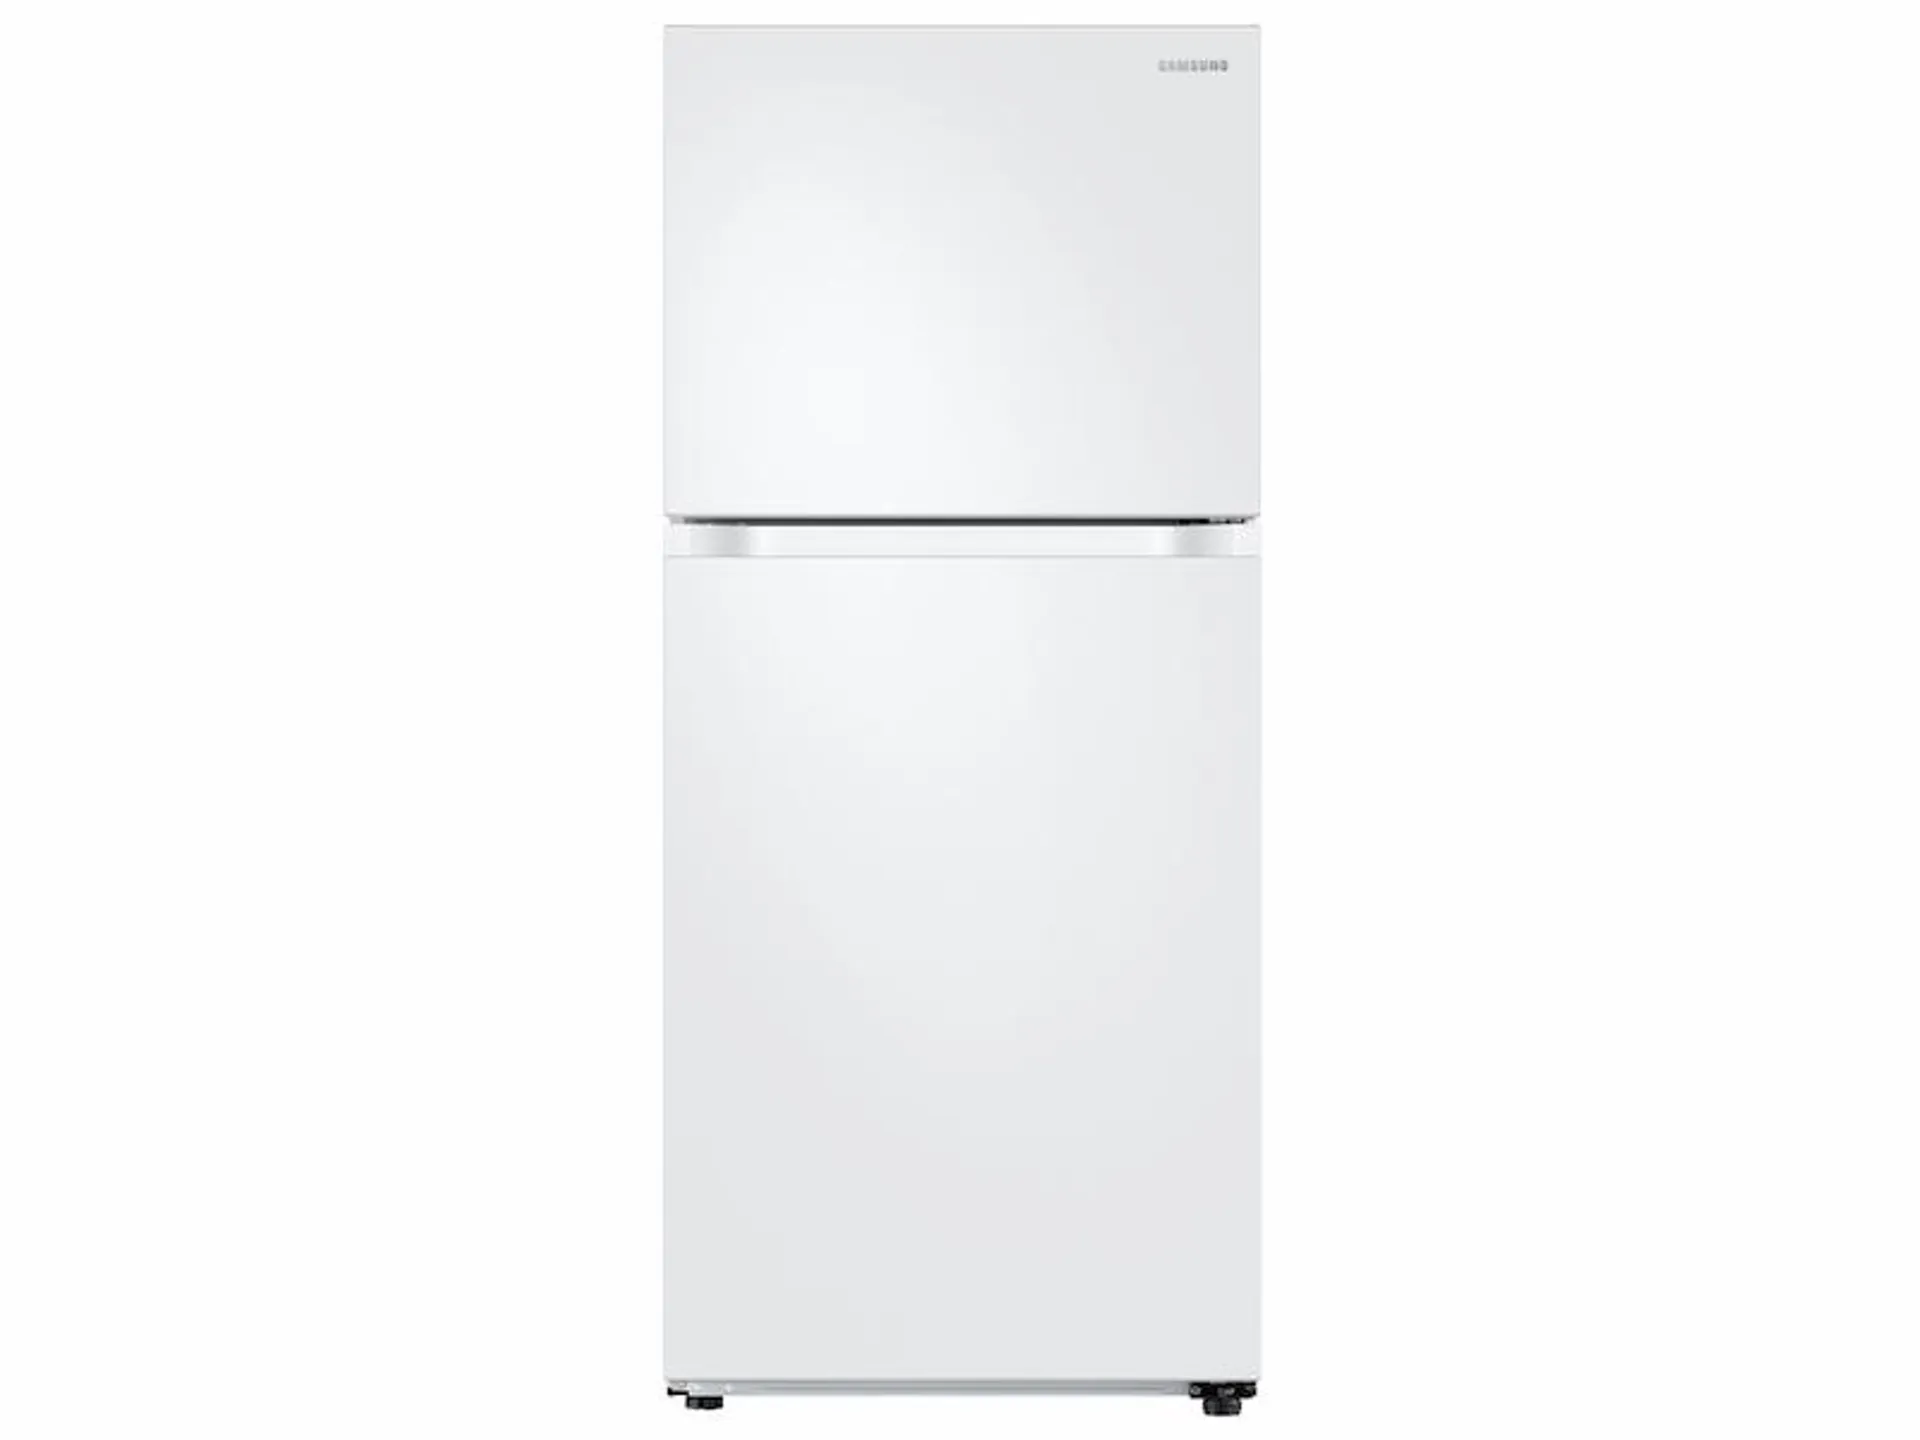 18 cu. ft. Top Freezer Refrigerator with FlexZone™ in White